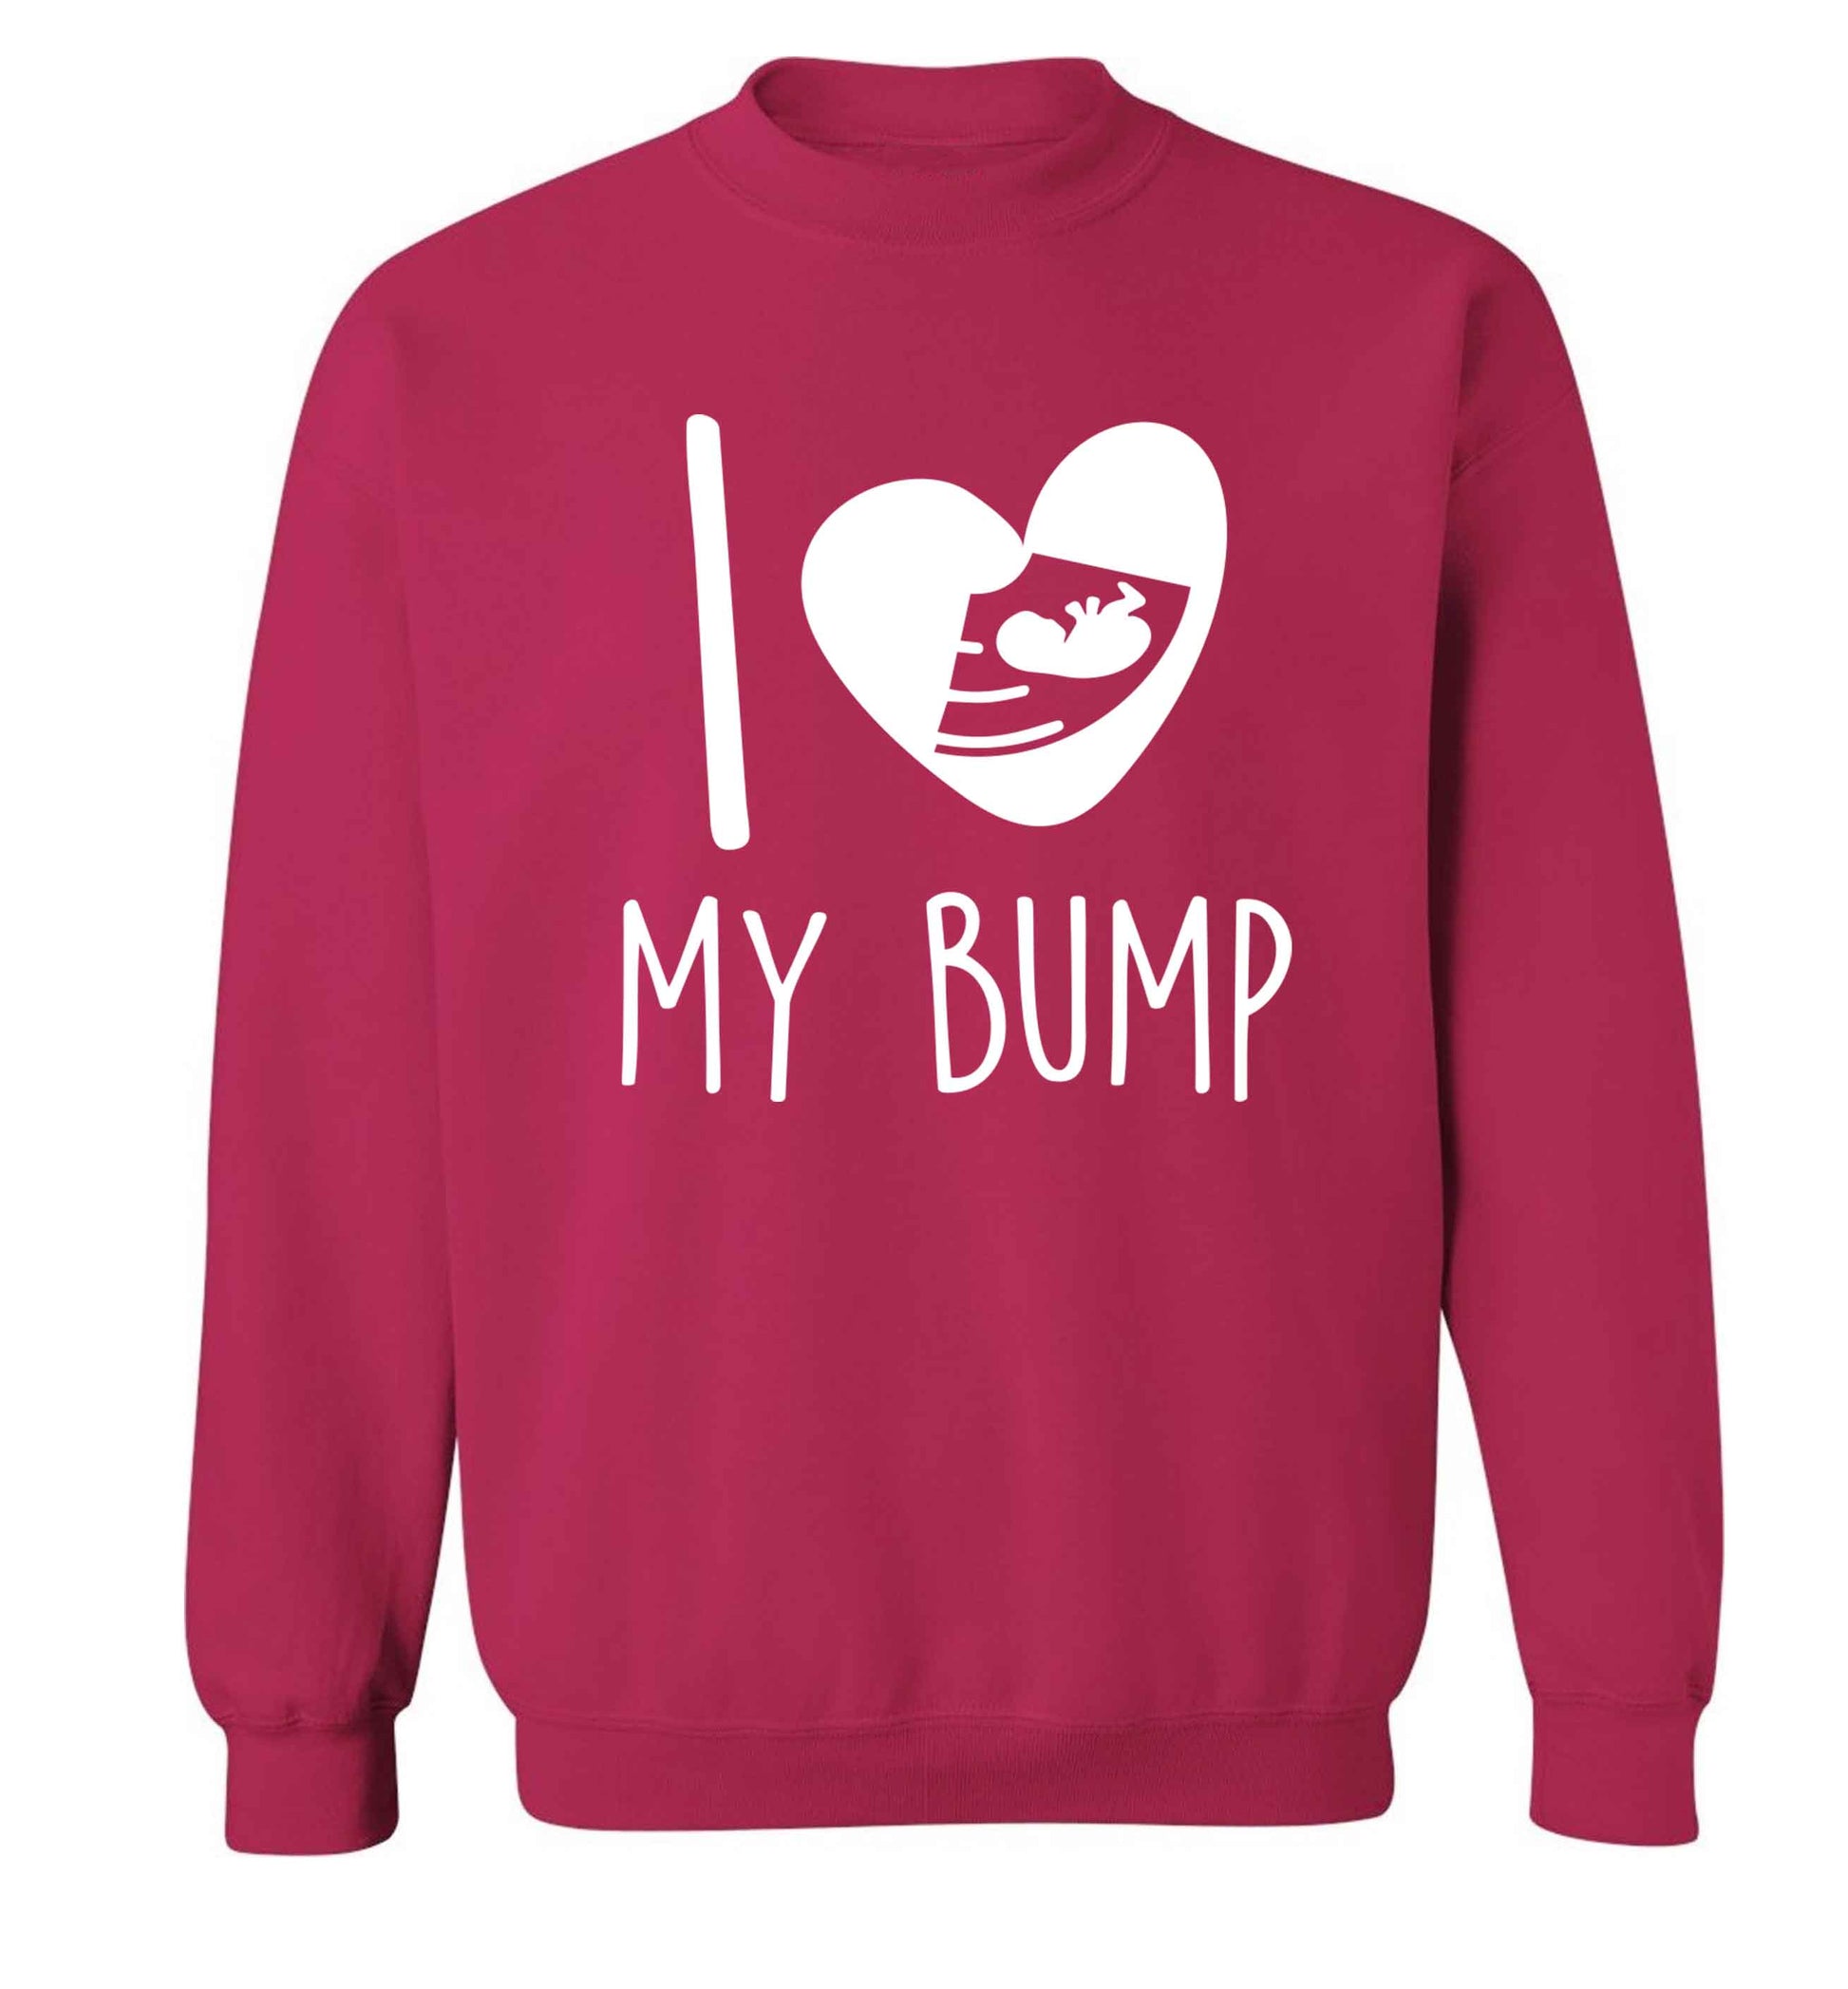 I love my bump Adult's unisex pink Sweater 2XL